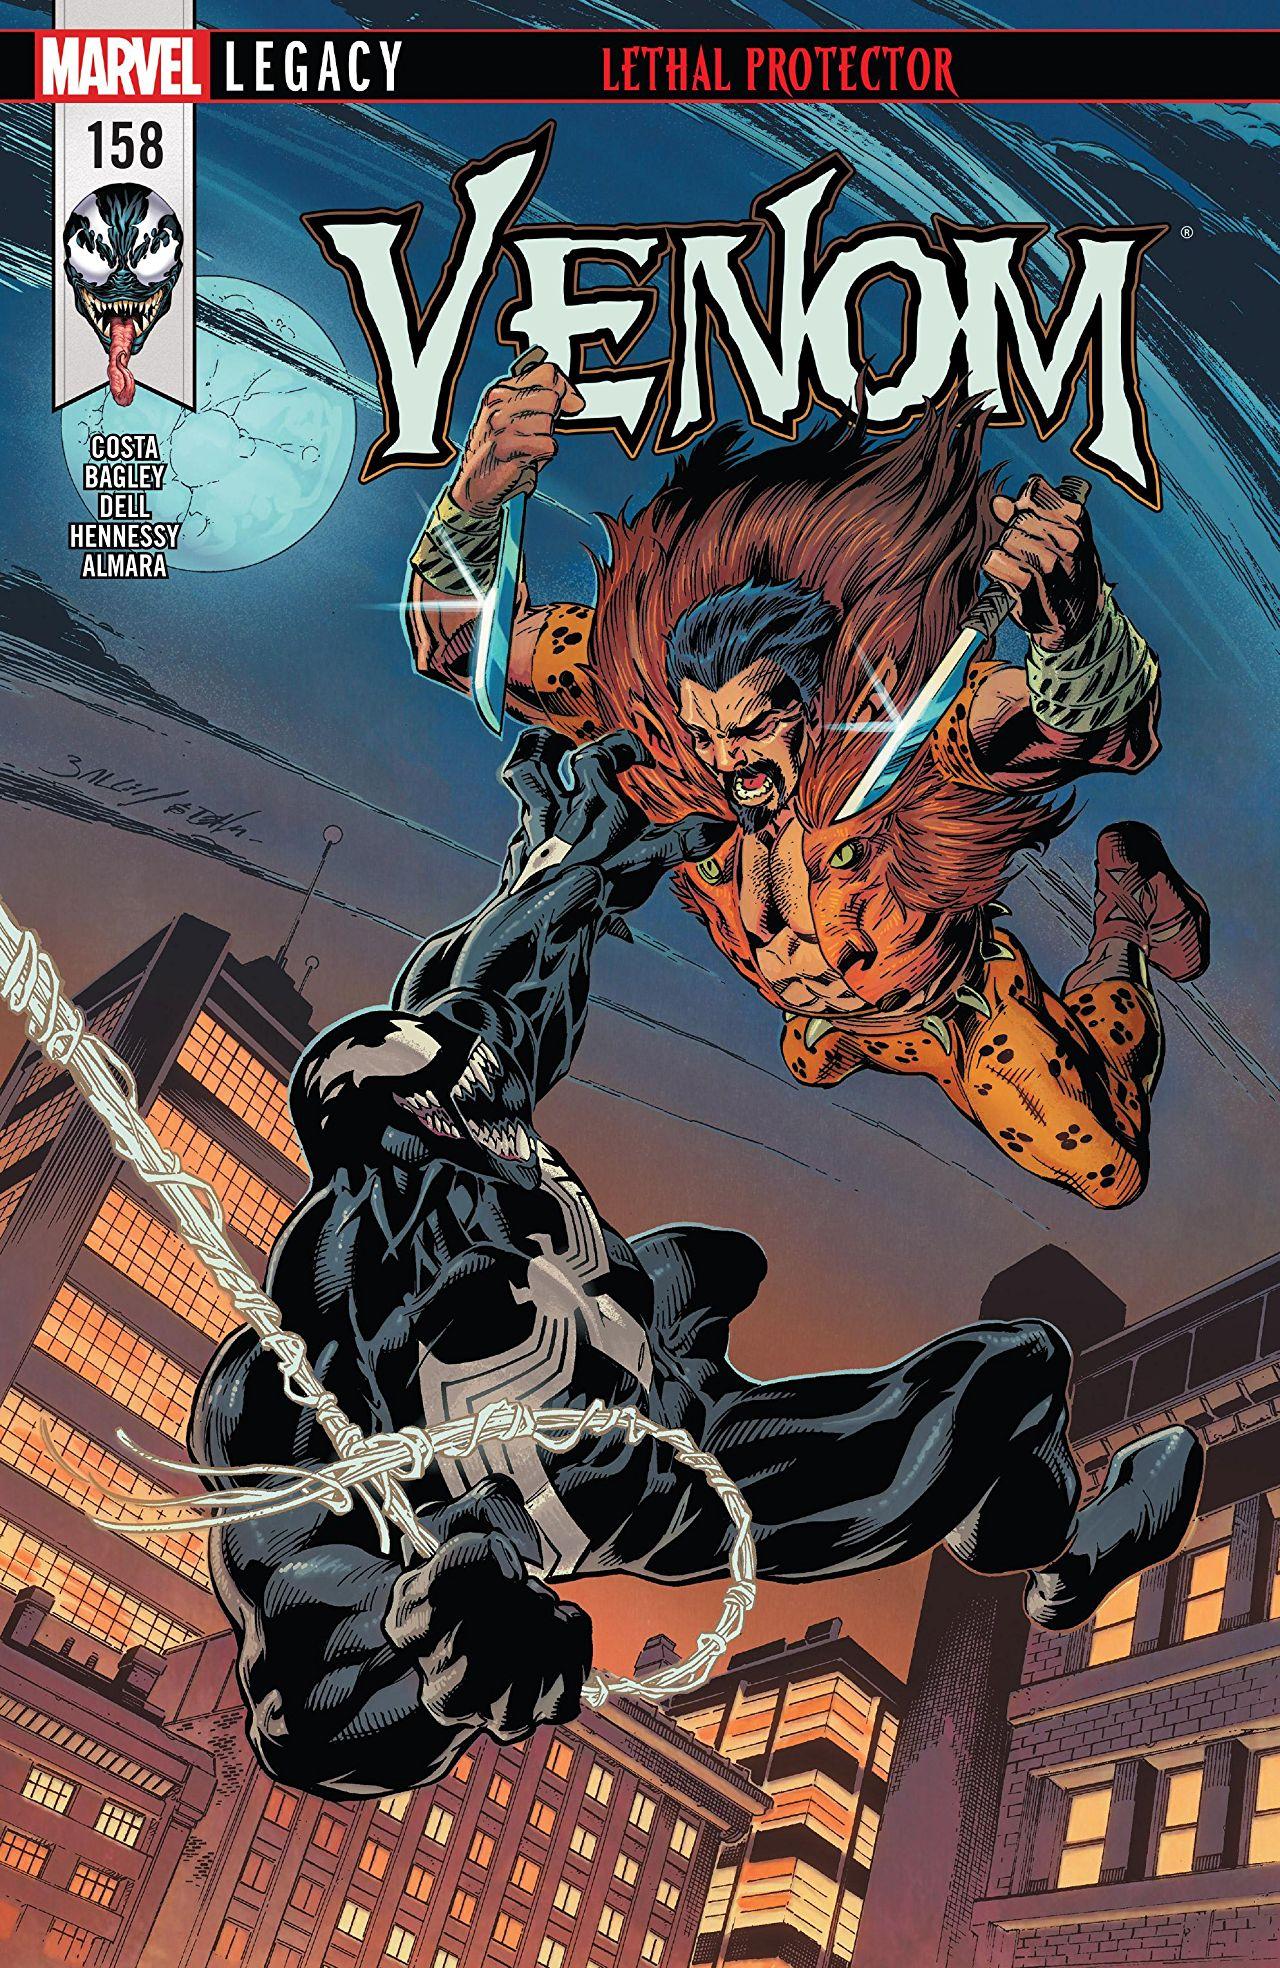 Venom Vol. 1 #158